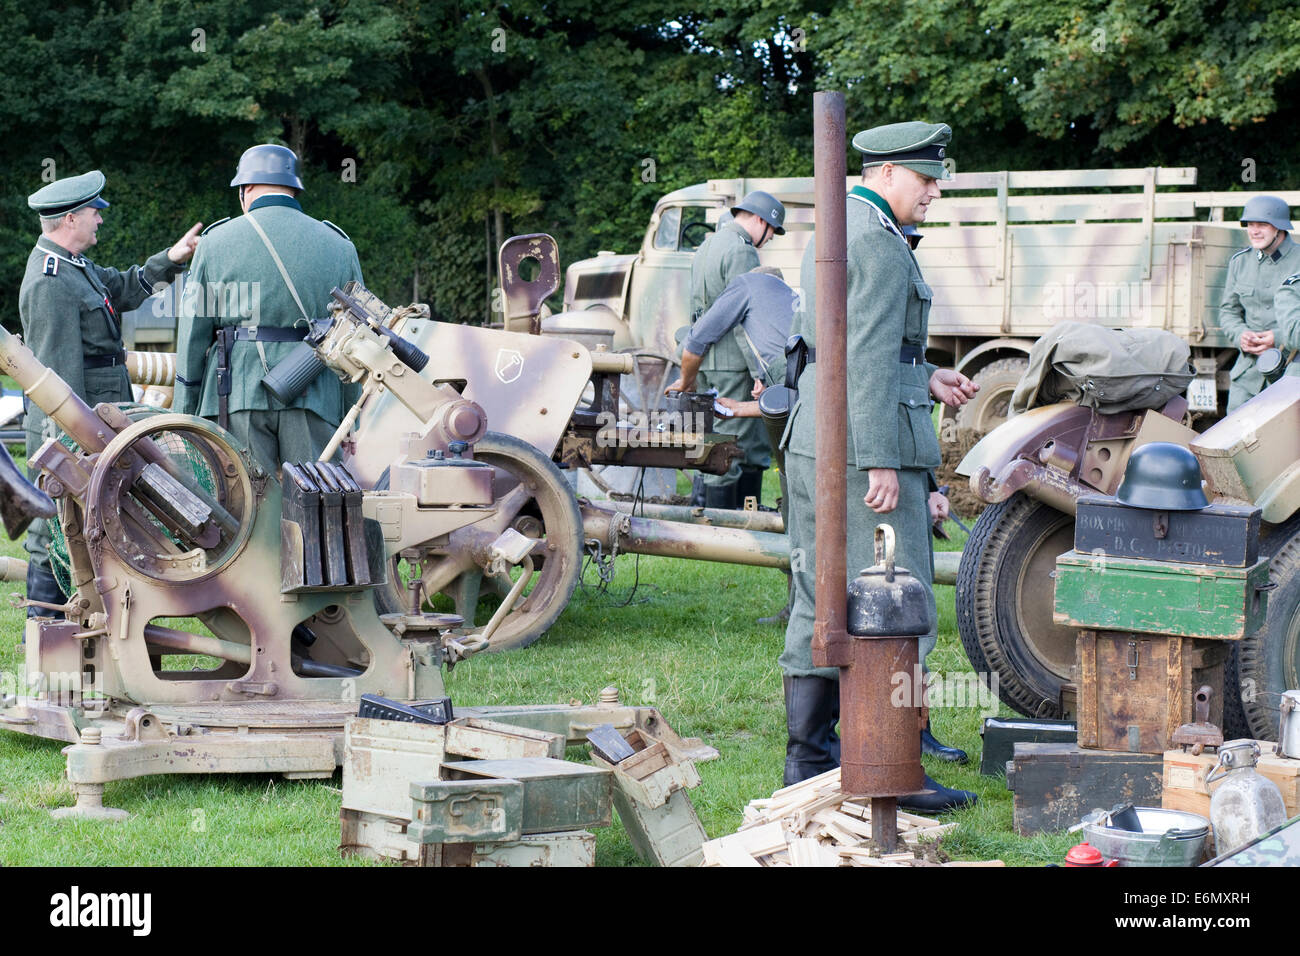 German Encampment  "Military vehicles and re-enactors" Stock Photo